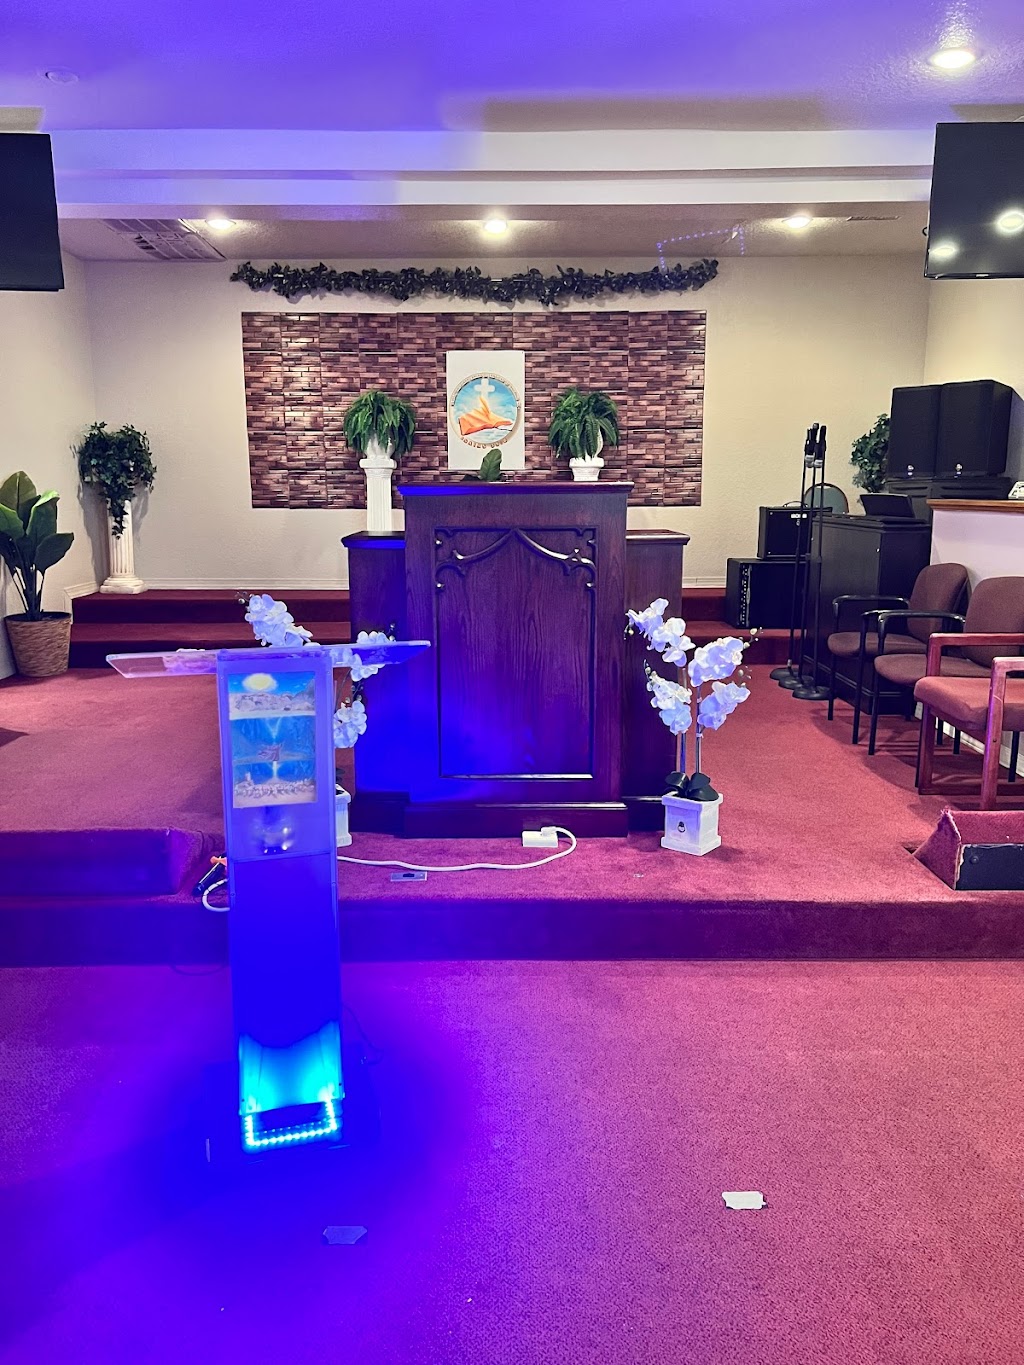 Iglesia Cristiana Camino de Santidad de Lakeland Inc | 1105 N Ruth Ave, Lakeland, FL 33805, USA | Phone: (813) 703-0802